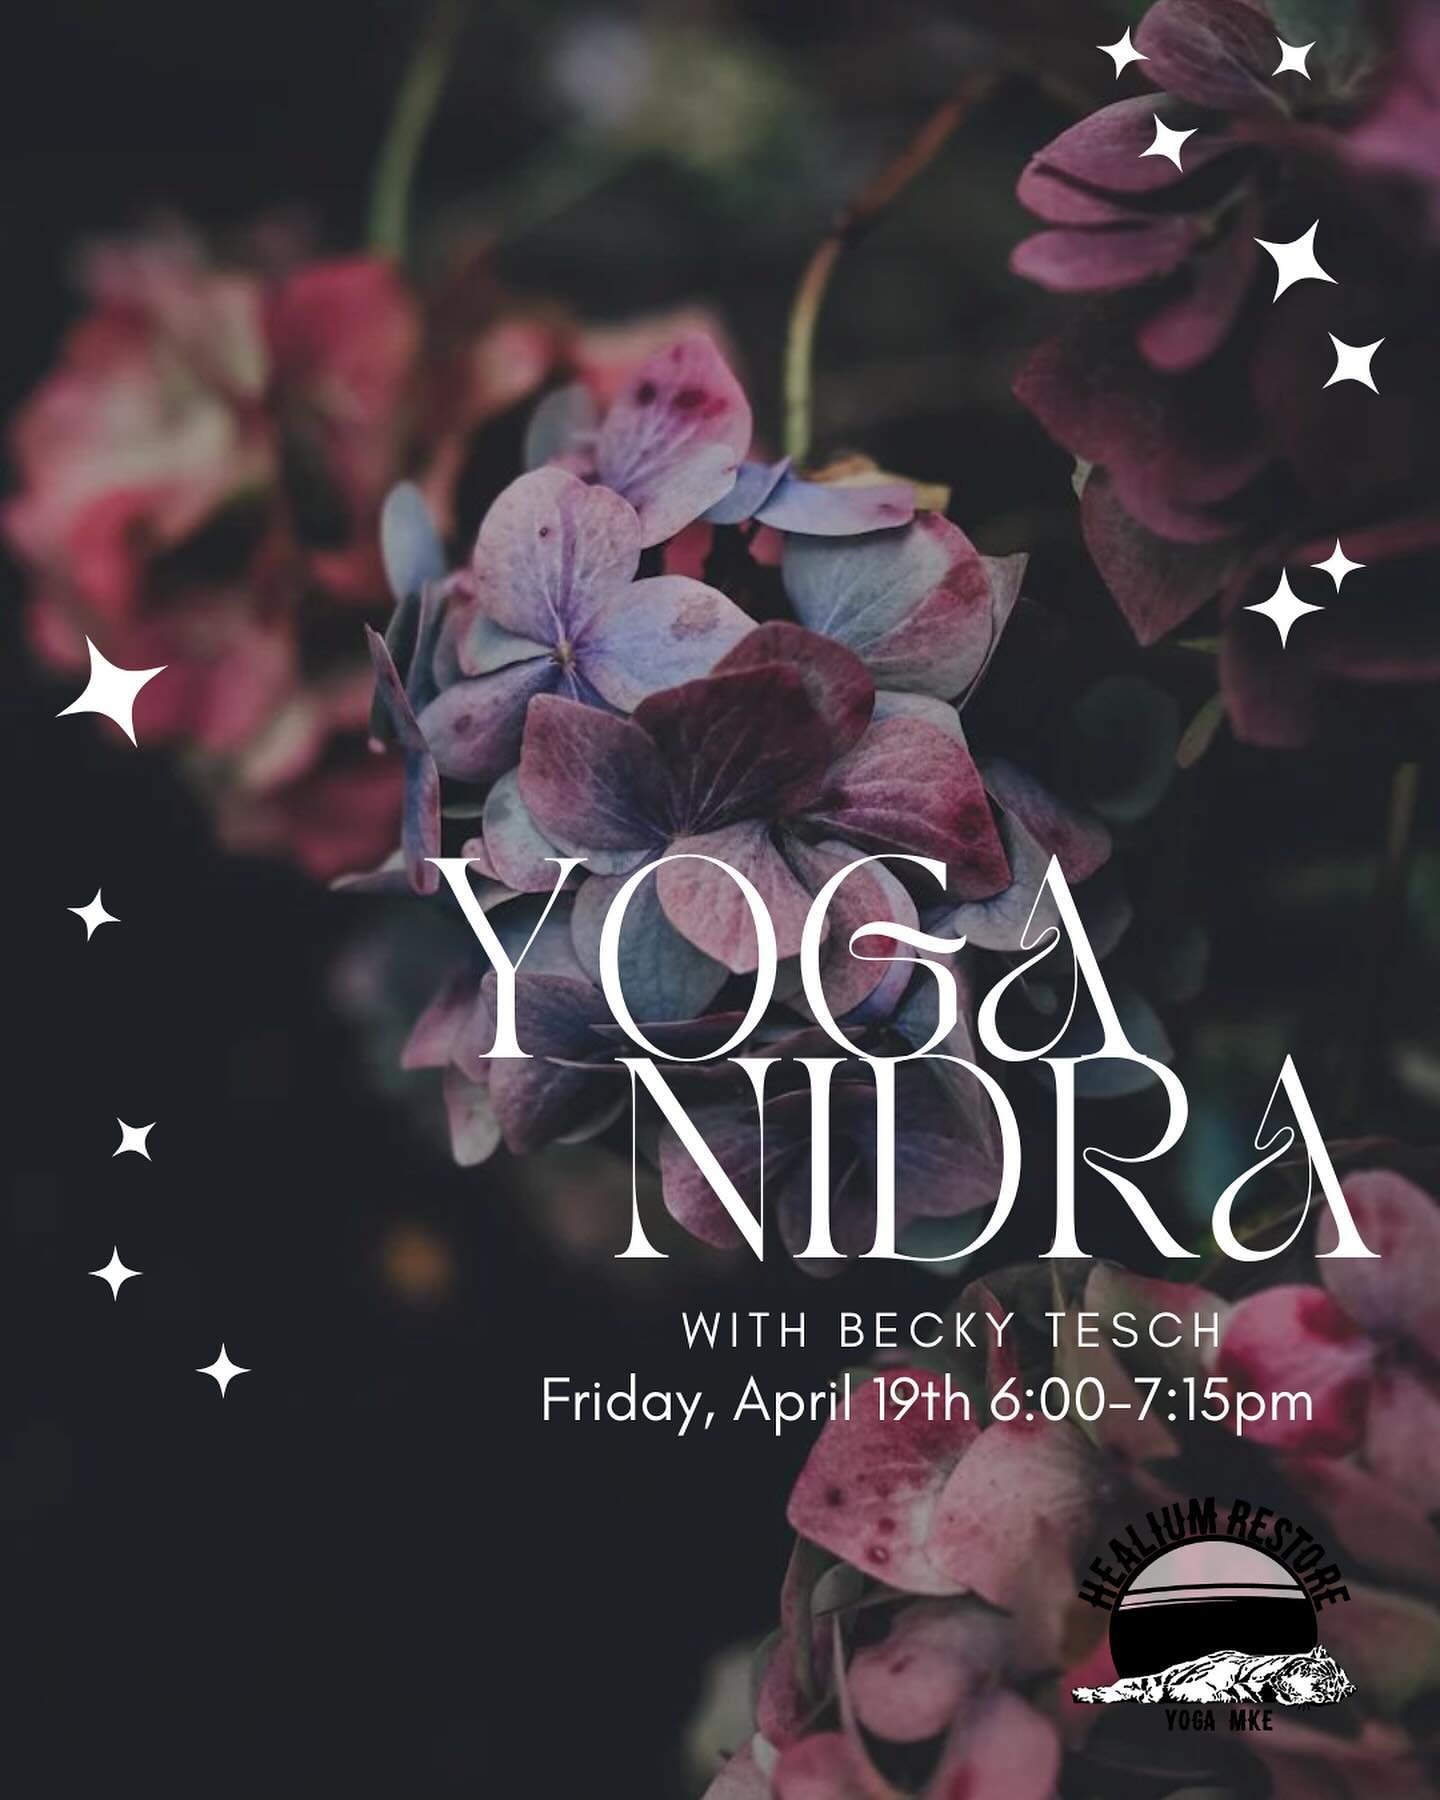 on the agenda this weekend:

🌷Friday 4/19 6-7:15pm Yoga Nidra w/ Becky 
🌷Saturday 4/20 100-11am Karma Class w/ Whitney 
🌷Saturday 4/20 6-8pm Earth Day Libra Full Moon Circle w/ Heather B.
🌷Sunday 4/21 8:30-9:30am Movement &amp; Meditation w/ Beth